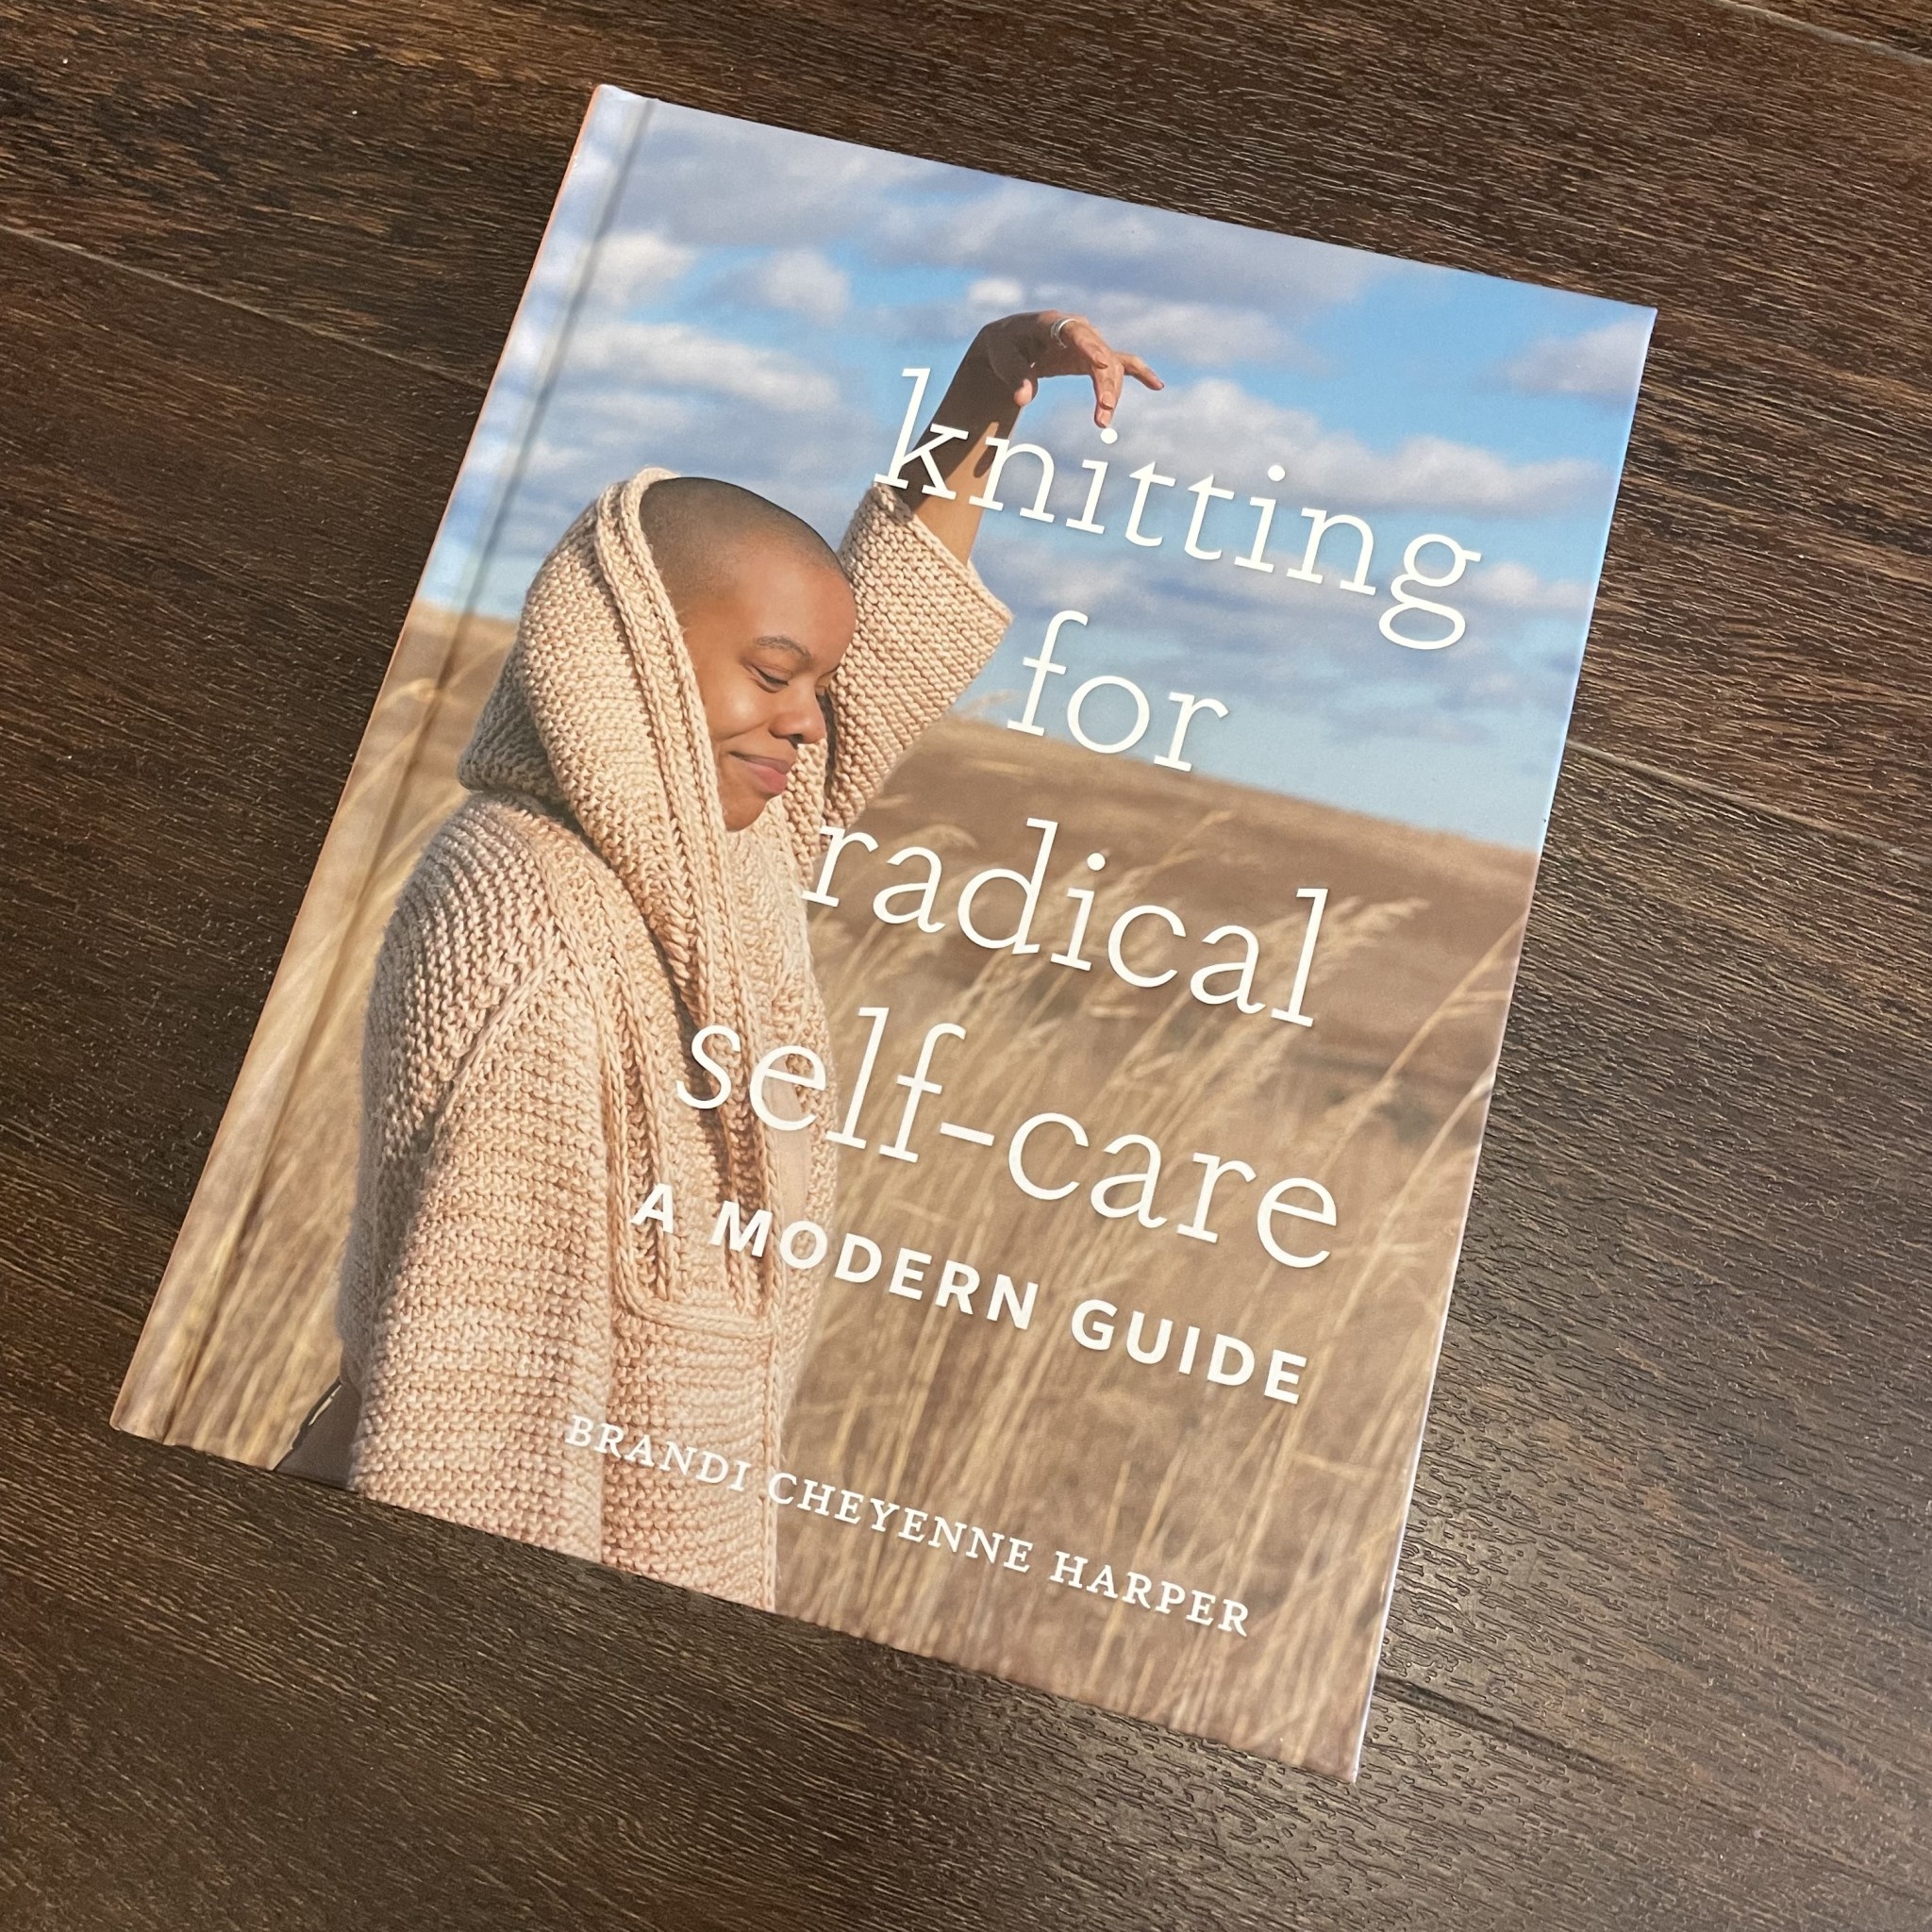 Knitting for Radical Self-Care by Brandi Cheyenne Harper